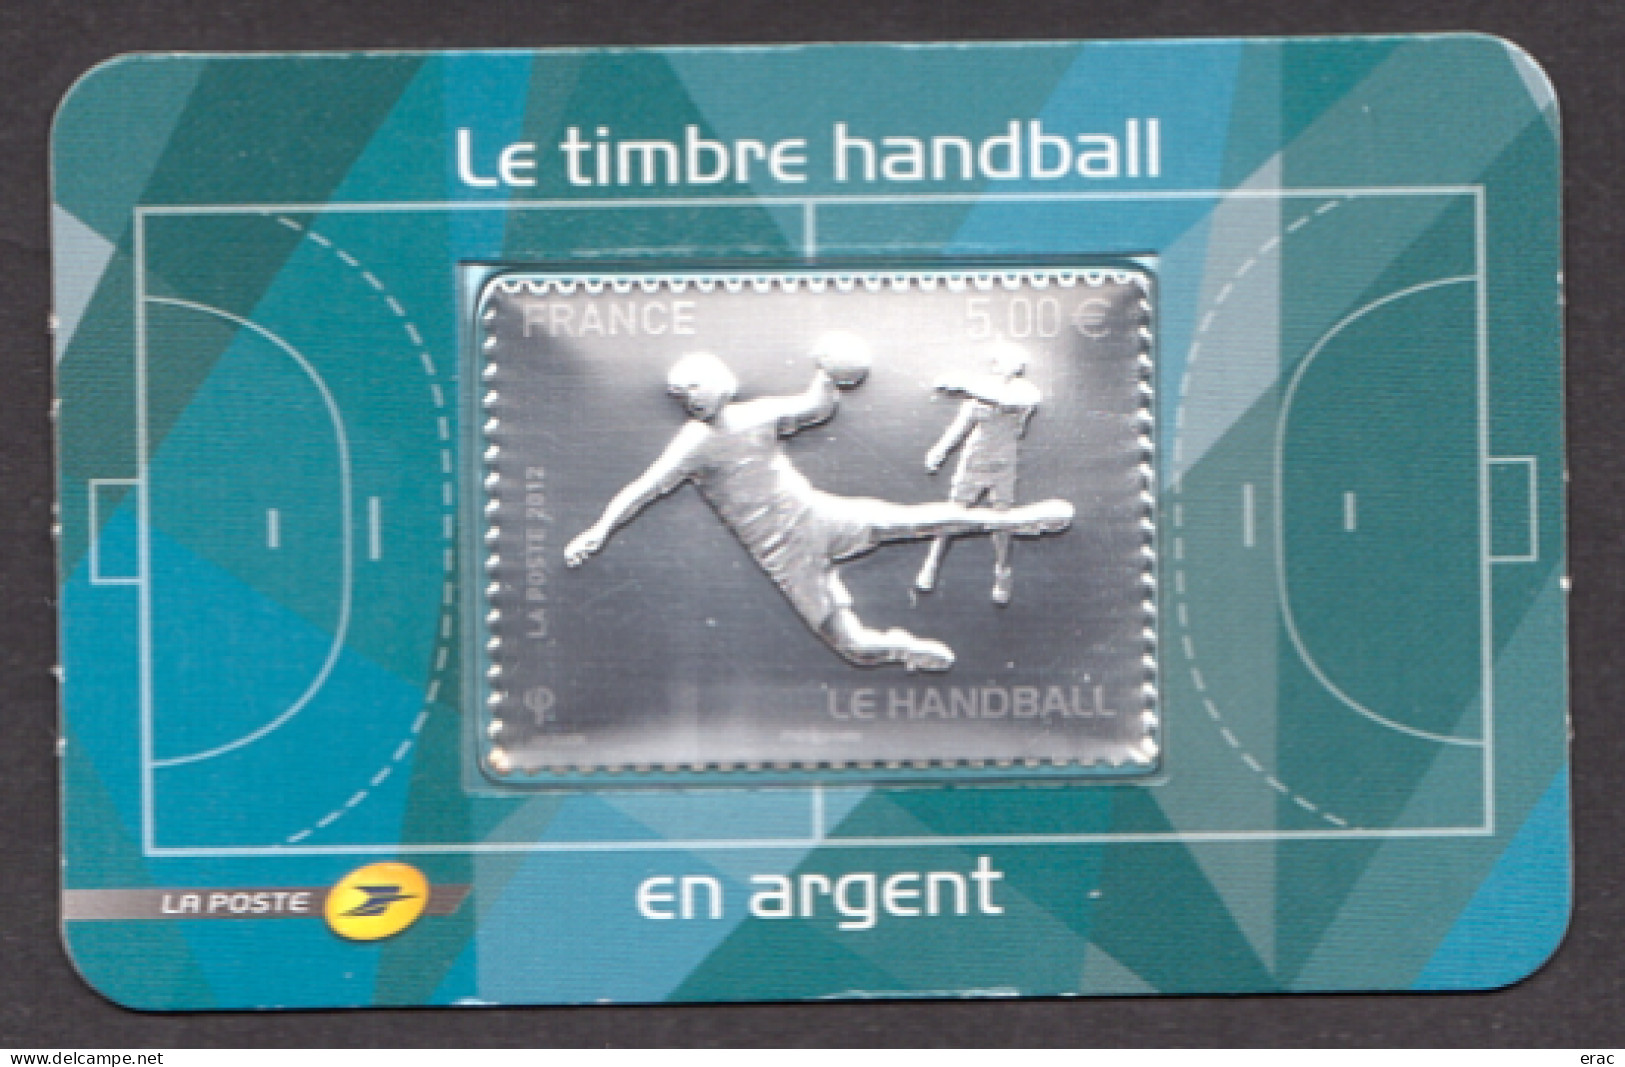 France - 2012 - Autoadhésif N° 738 - Neuf ** - Le Handball - Timbre Argent Sous Blister Cartonné - Ongebruikt